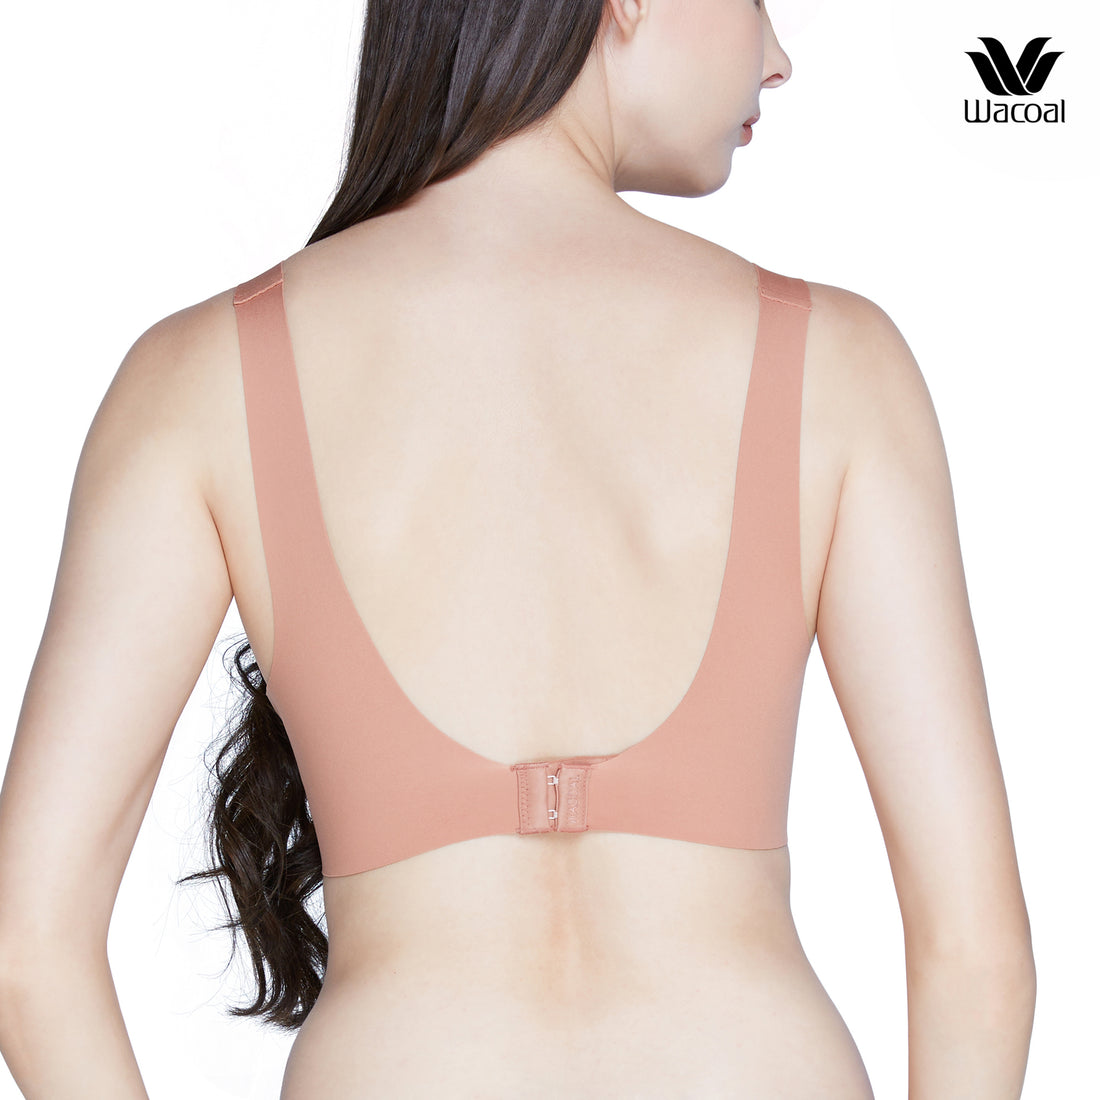 Wacoal Go Girls Smart Size Wavy Top Wacoal strapless bra